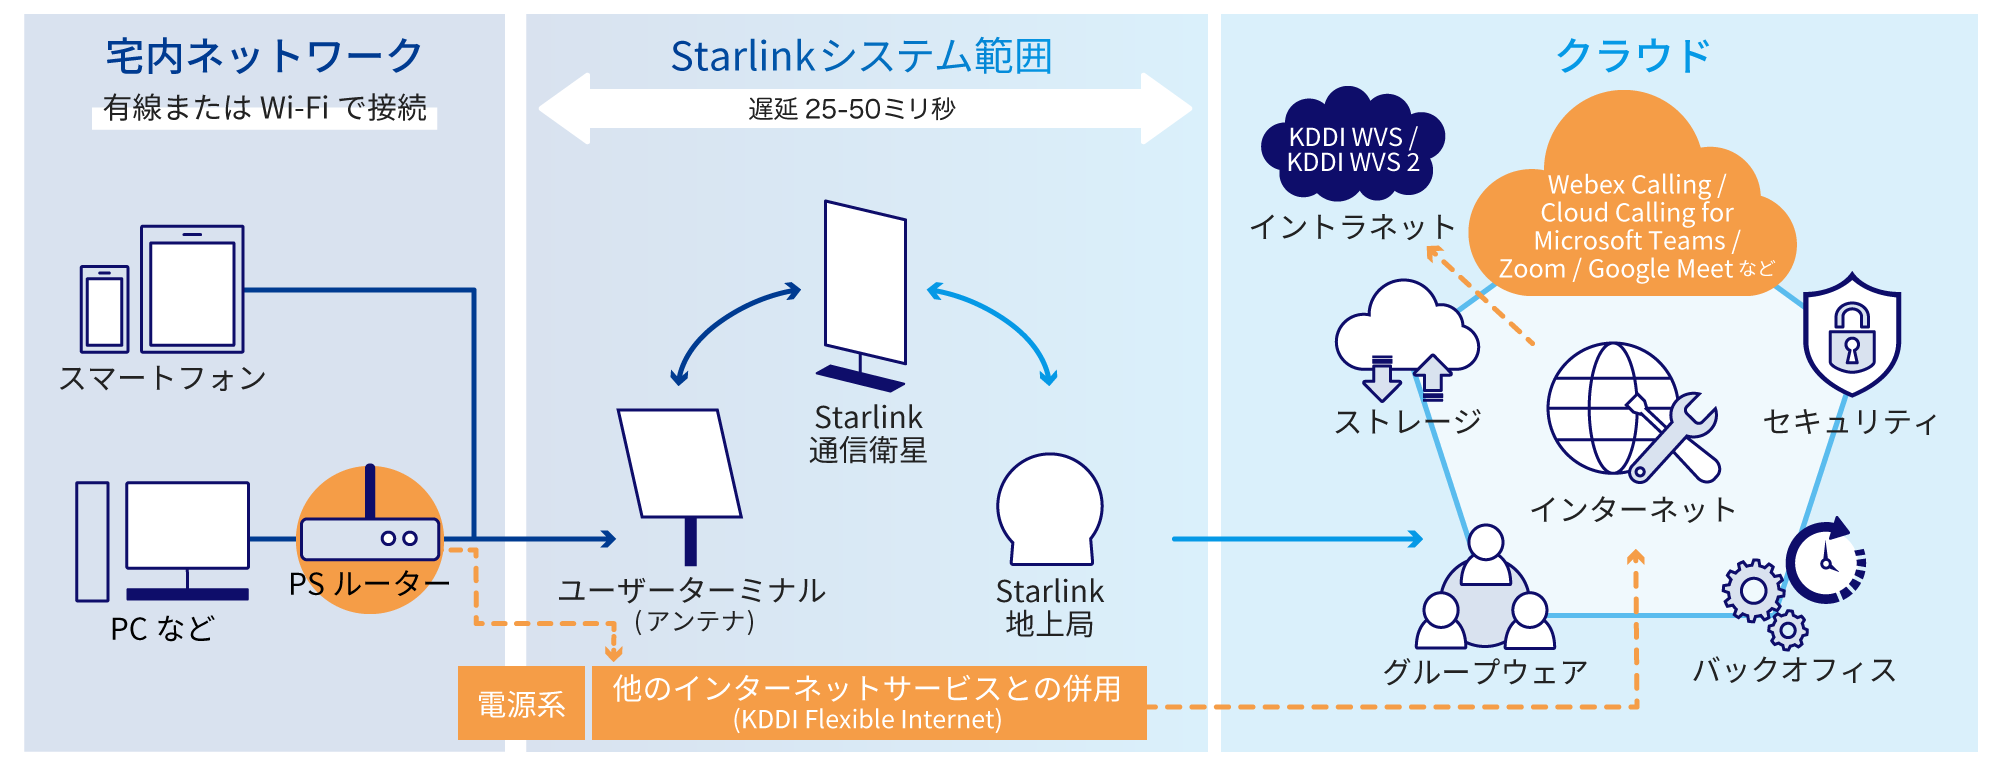 KDDI】Starlink Business | 衛星通信・衛星電話/Starlink | 法人向け